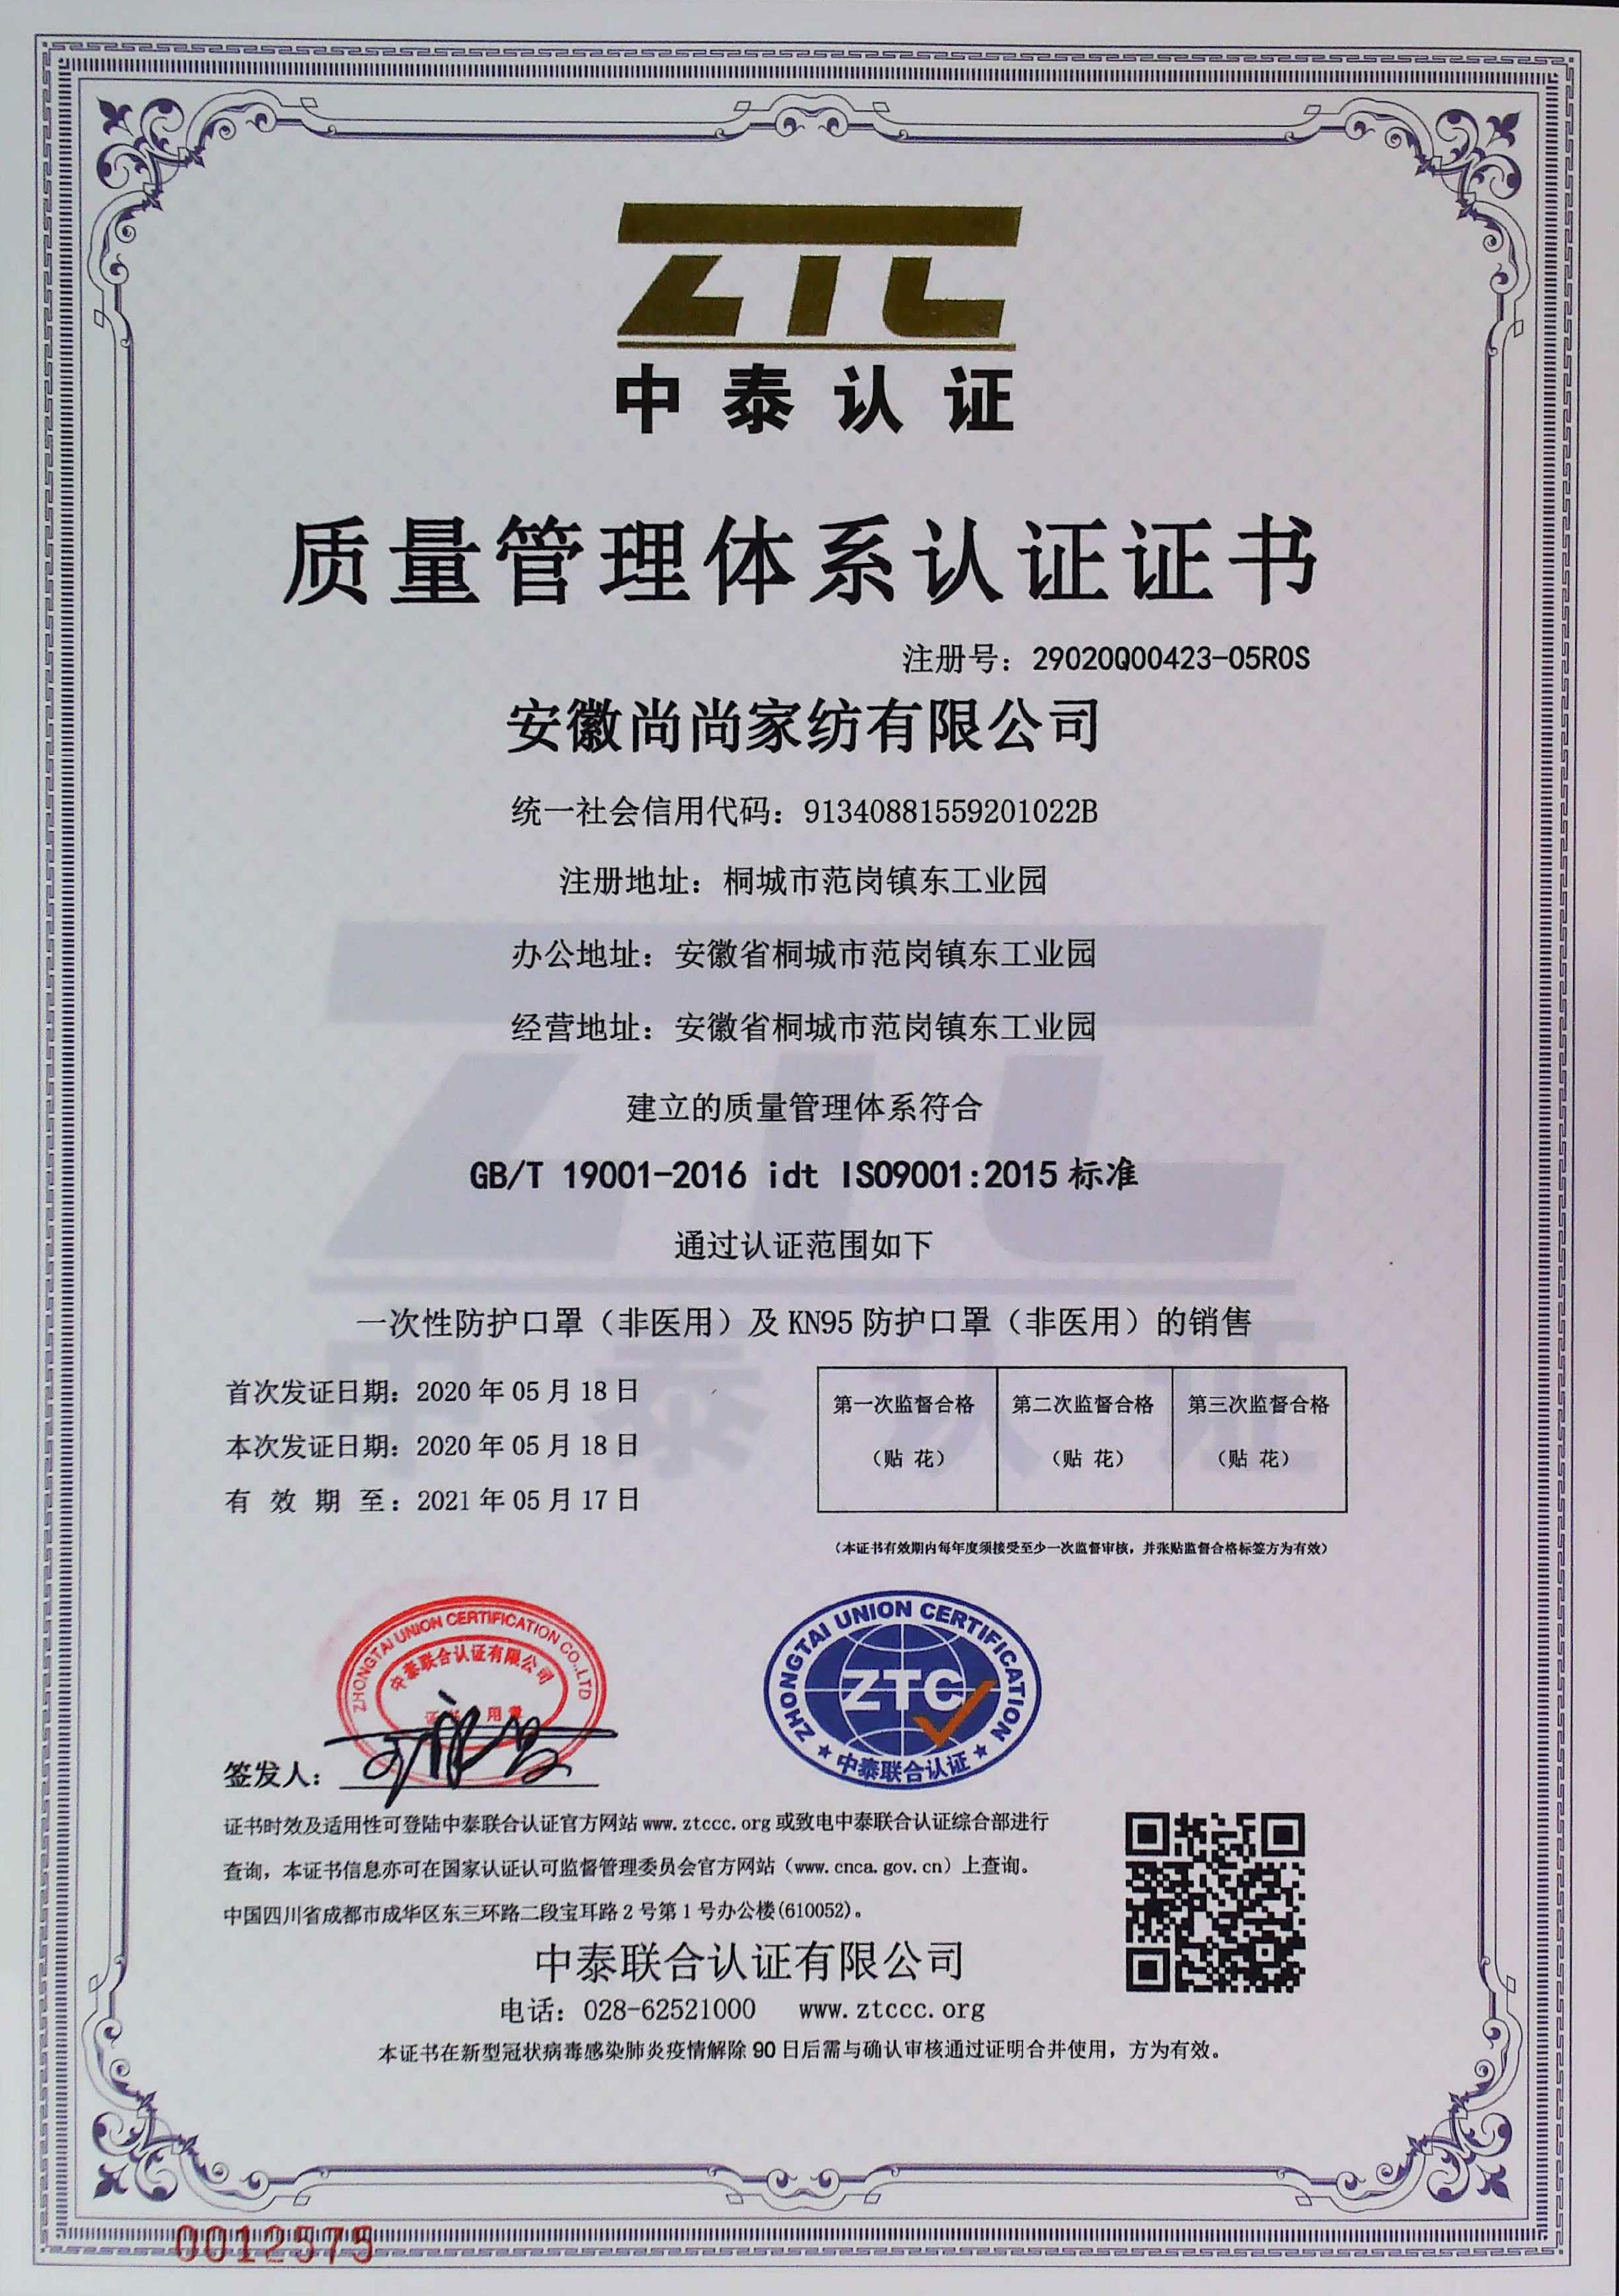 Anhui Sunshine Home Textile Co., Ltd. Certifications